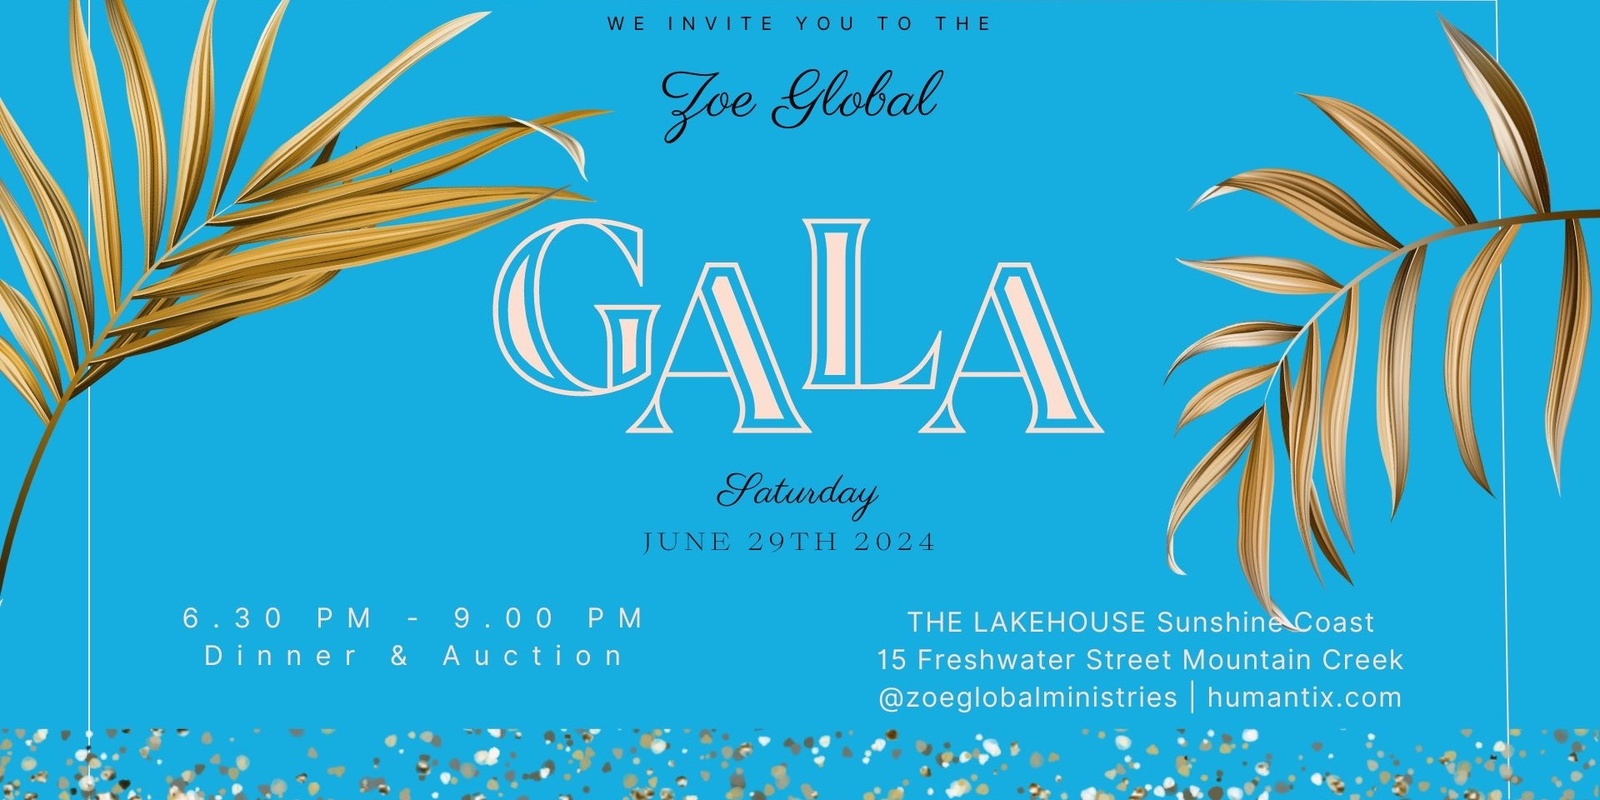 Banner image for Zoe Global Gala Night 